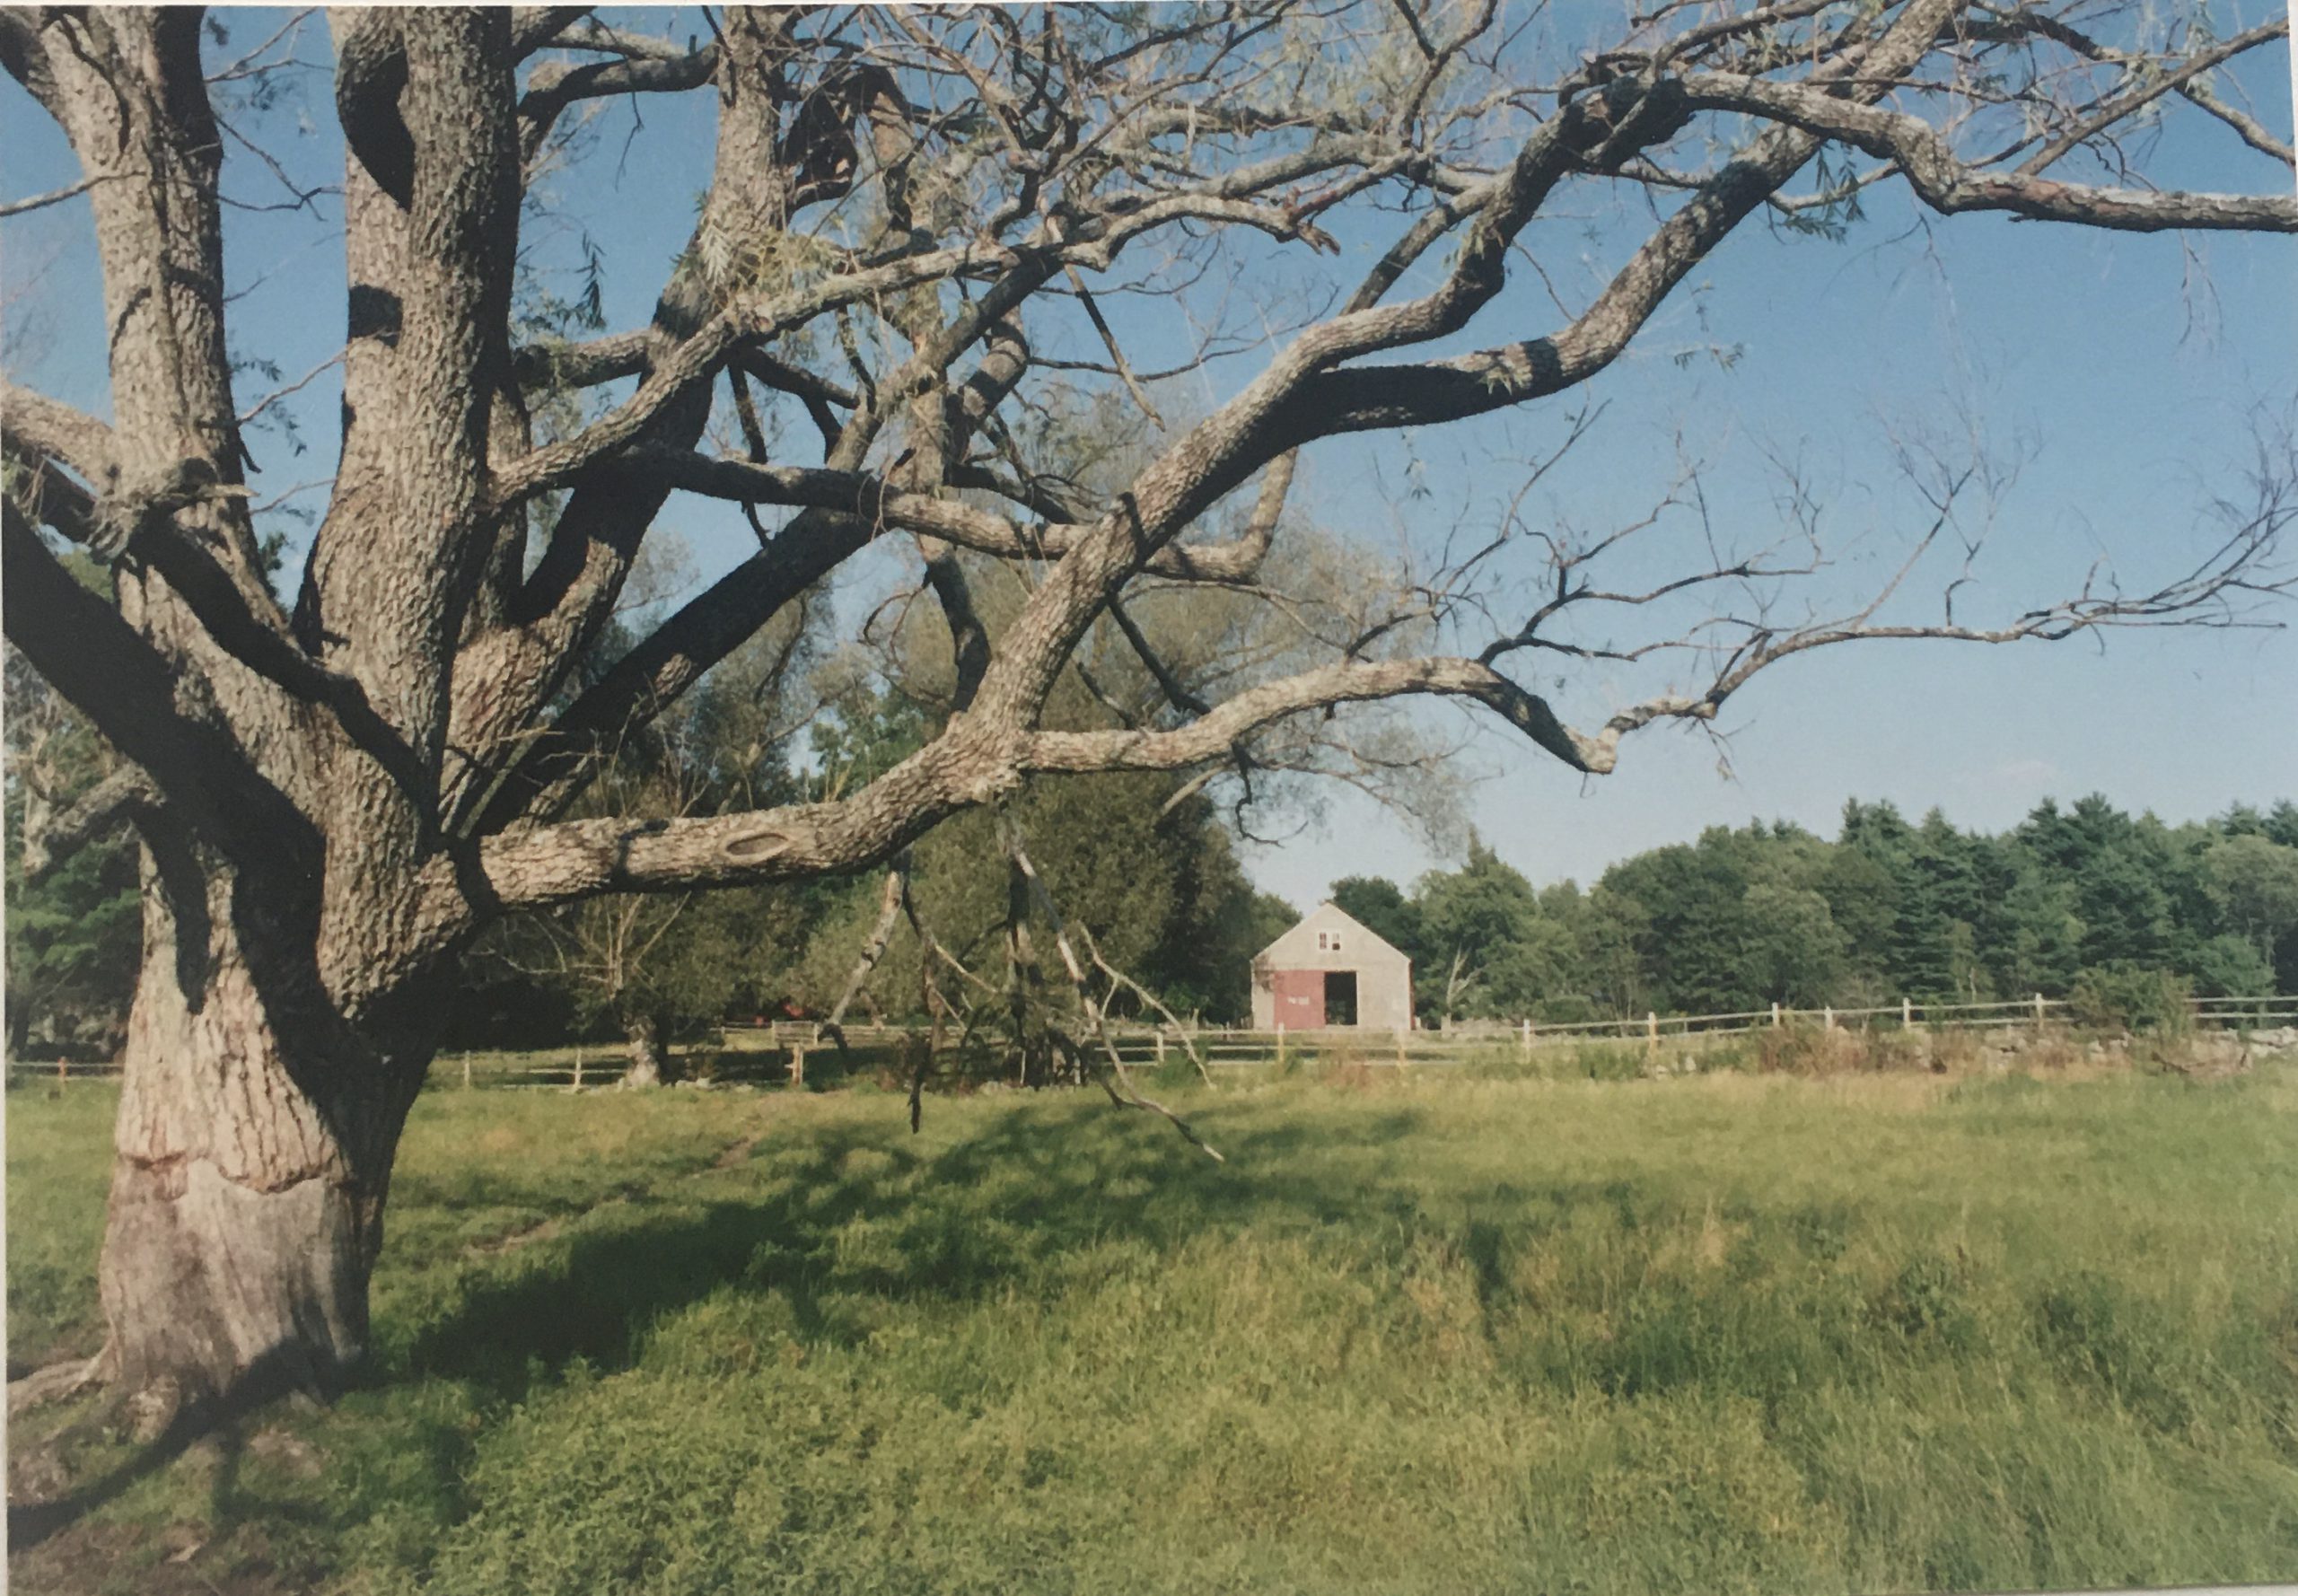 View of Deerhorn Farm